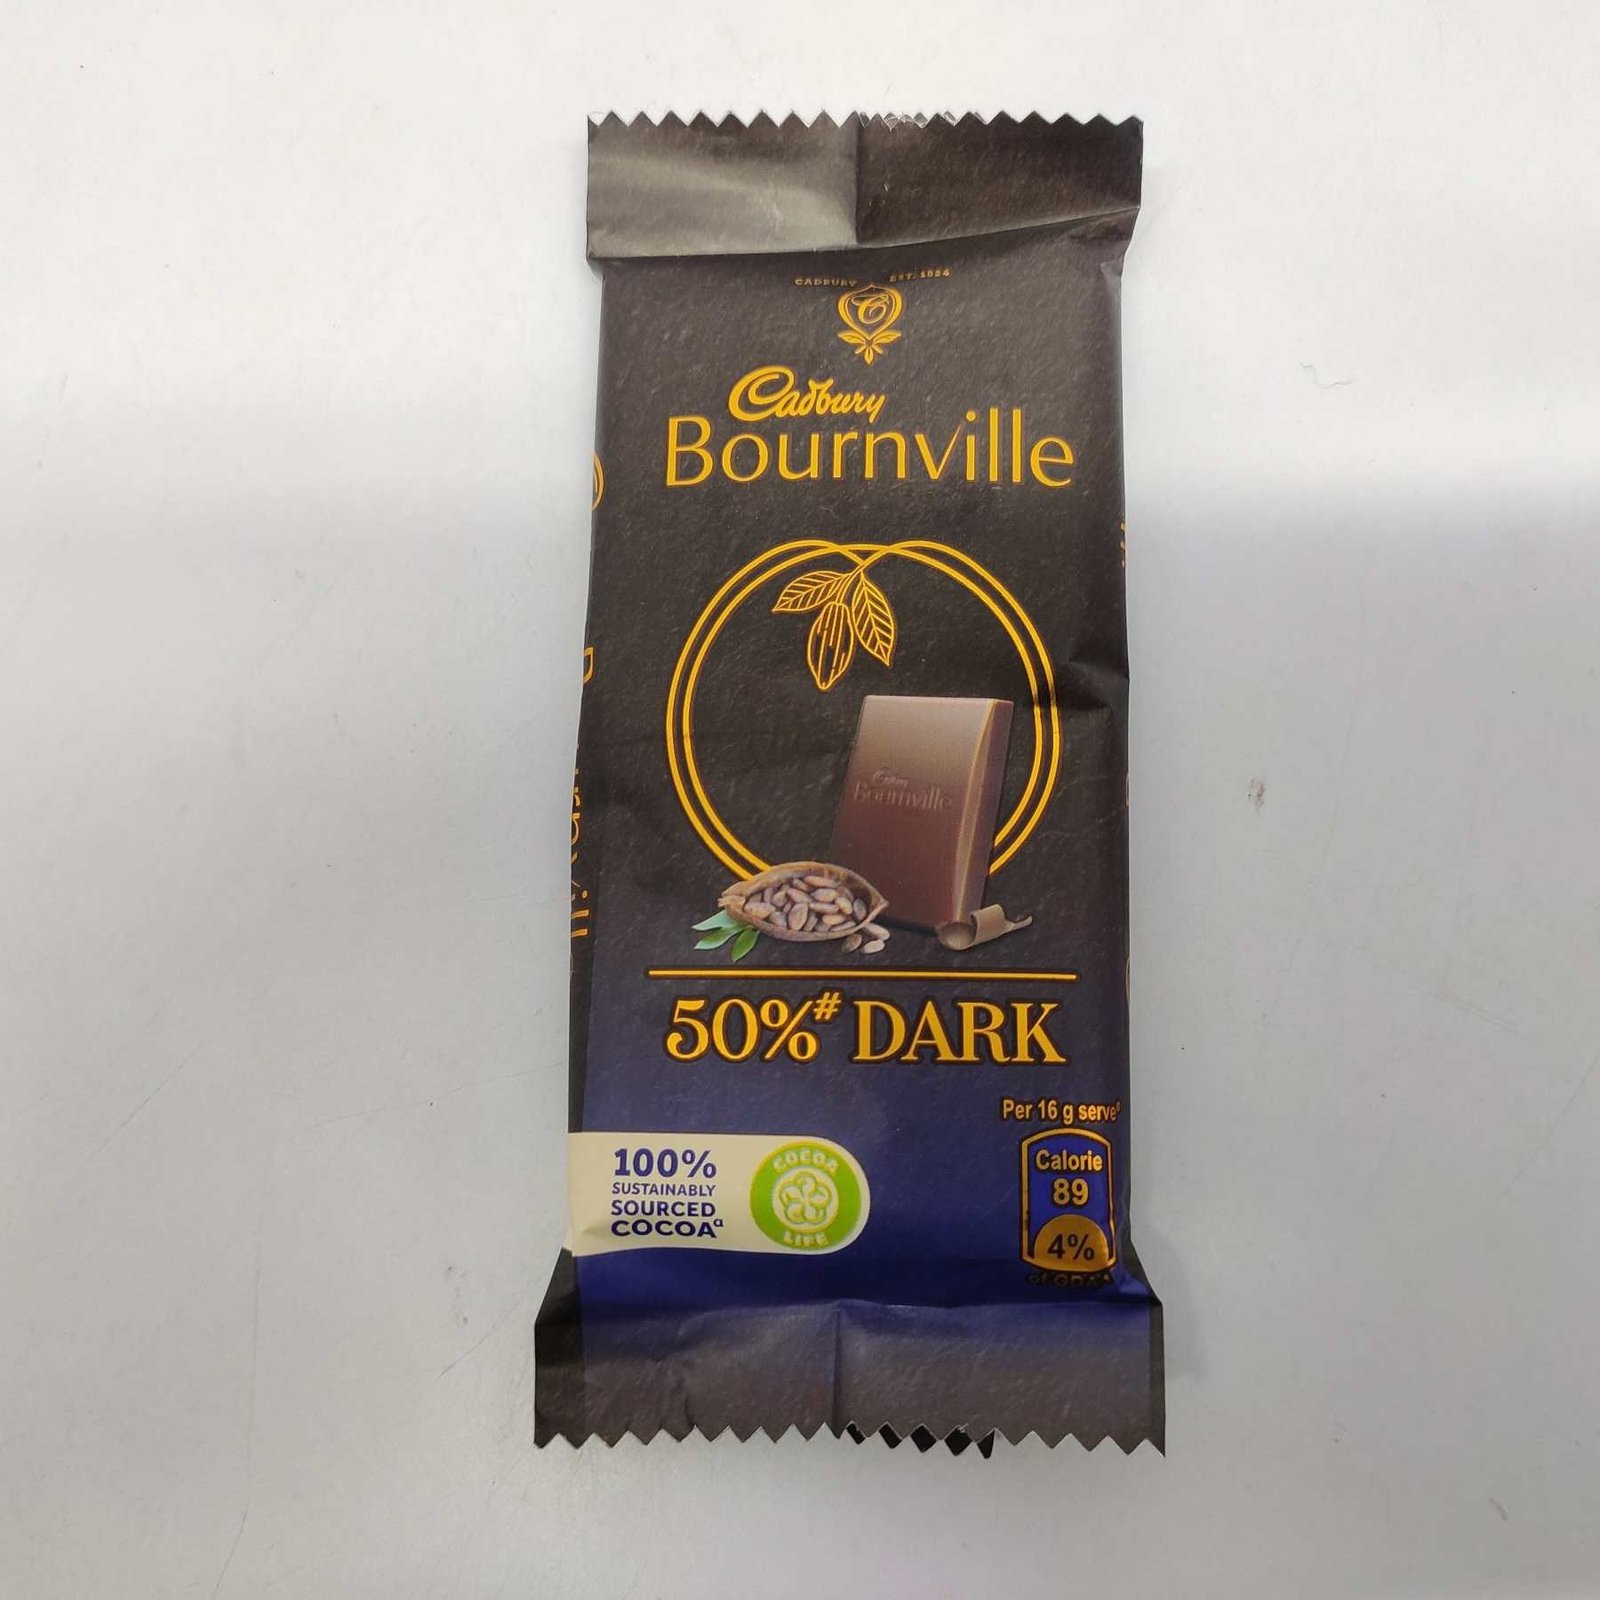 Cadbury Bournville 50% dark, 31 grams